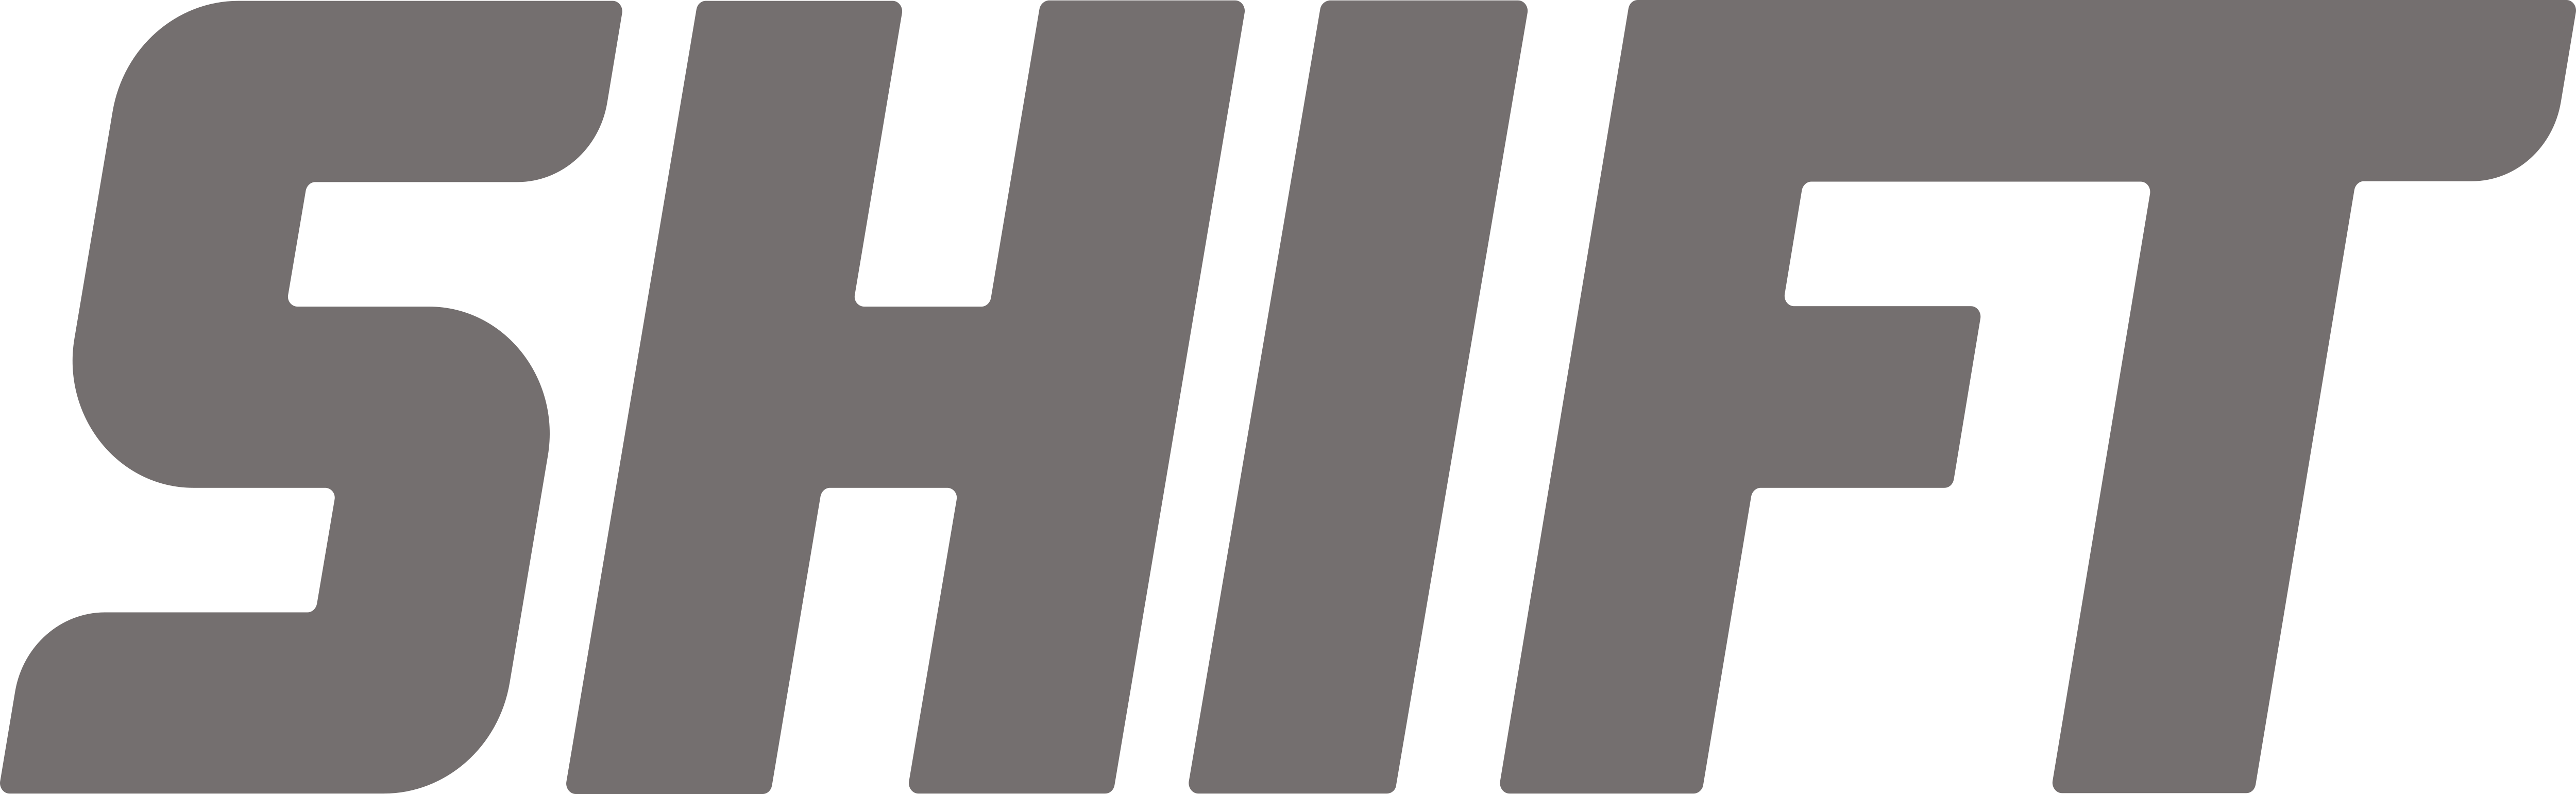 Shift technologies. Shift logo. Shift надпись. POWERSHIFT логотип. Логотип «shift2rail».